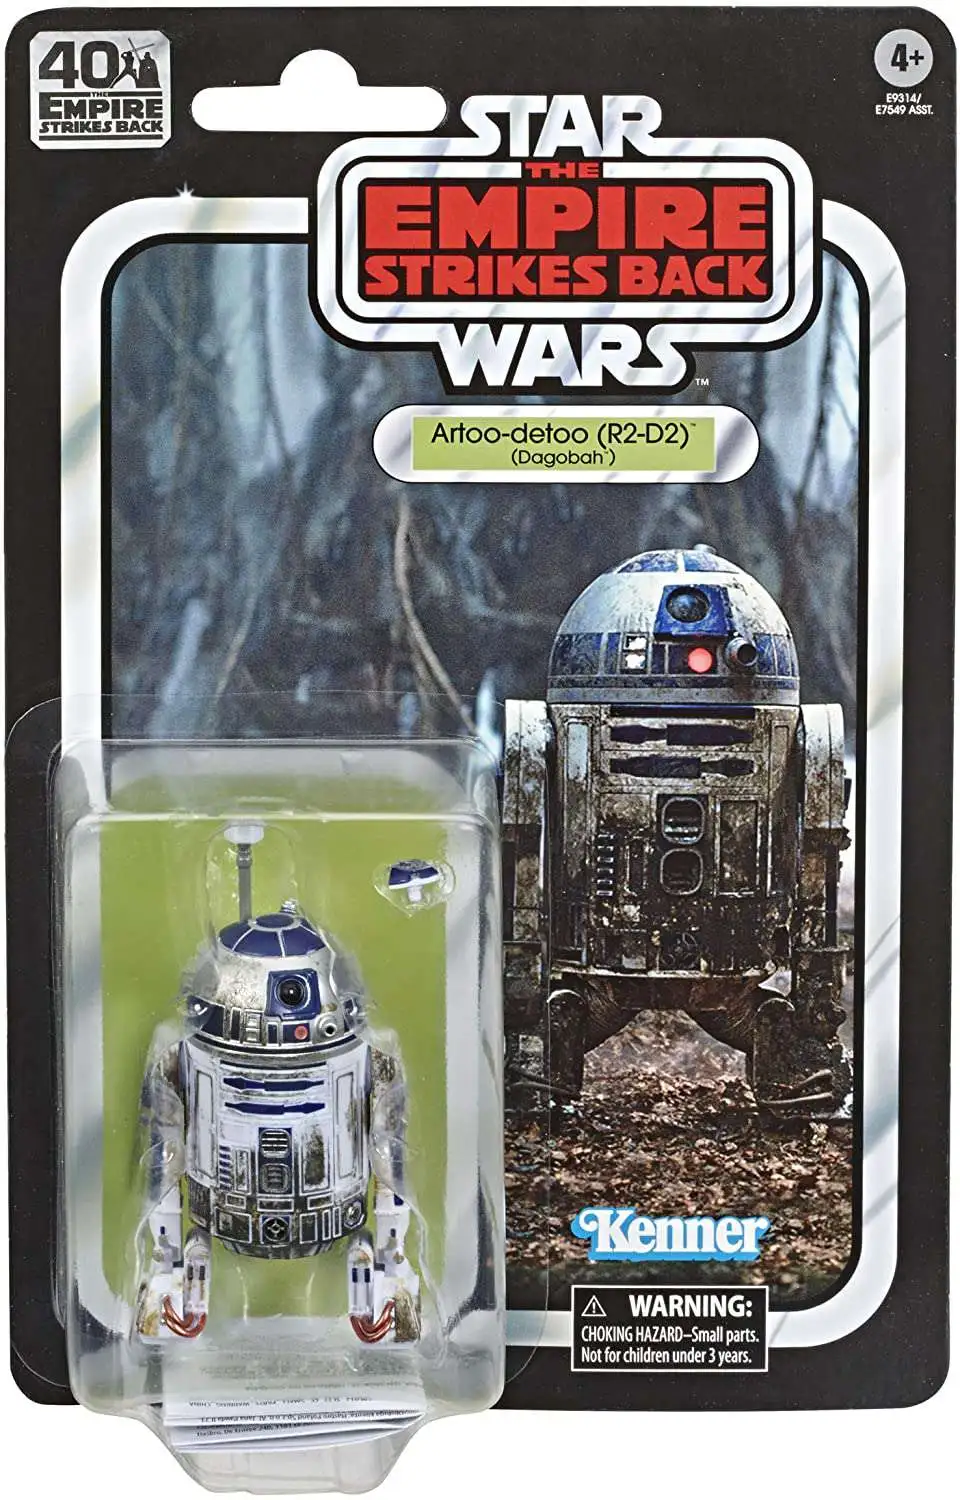 Star Wars The Black Series Empire Strikes Back 40th Anniversary R2-D2 Dagobah 